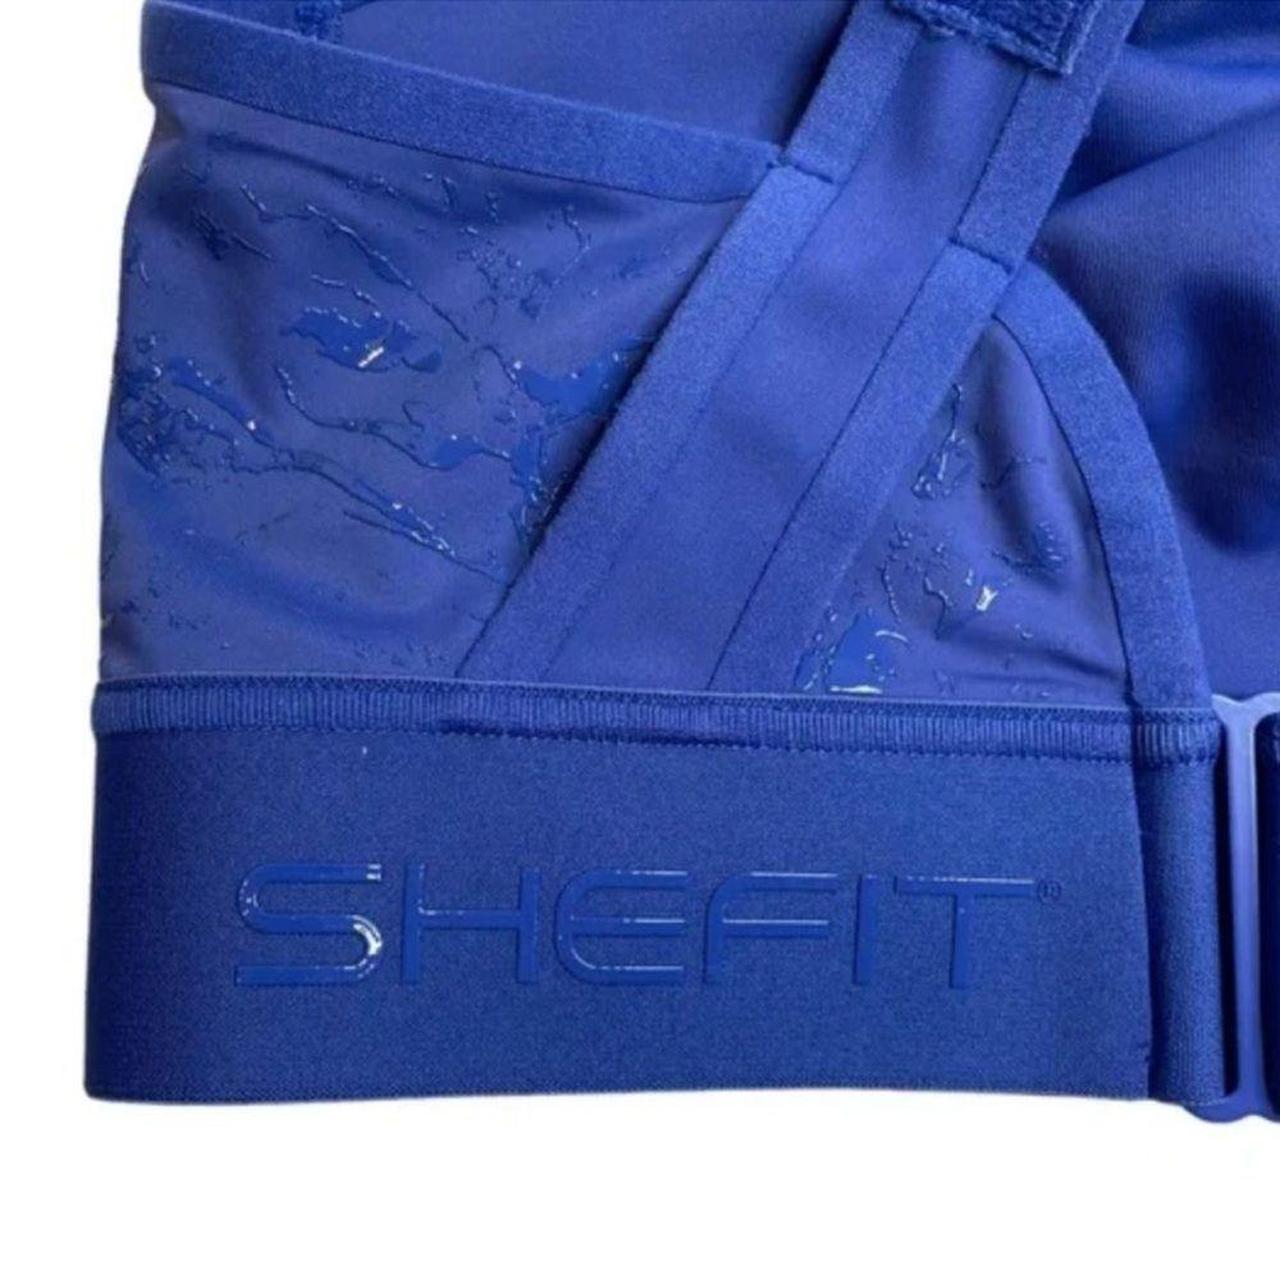 SHEFIT Flex Sports Bra Relentless Blue 1Luxe Size - Depop